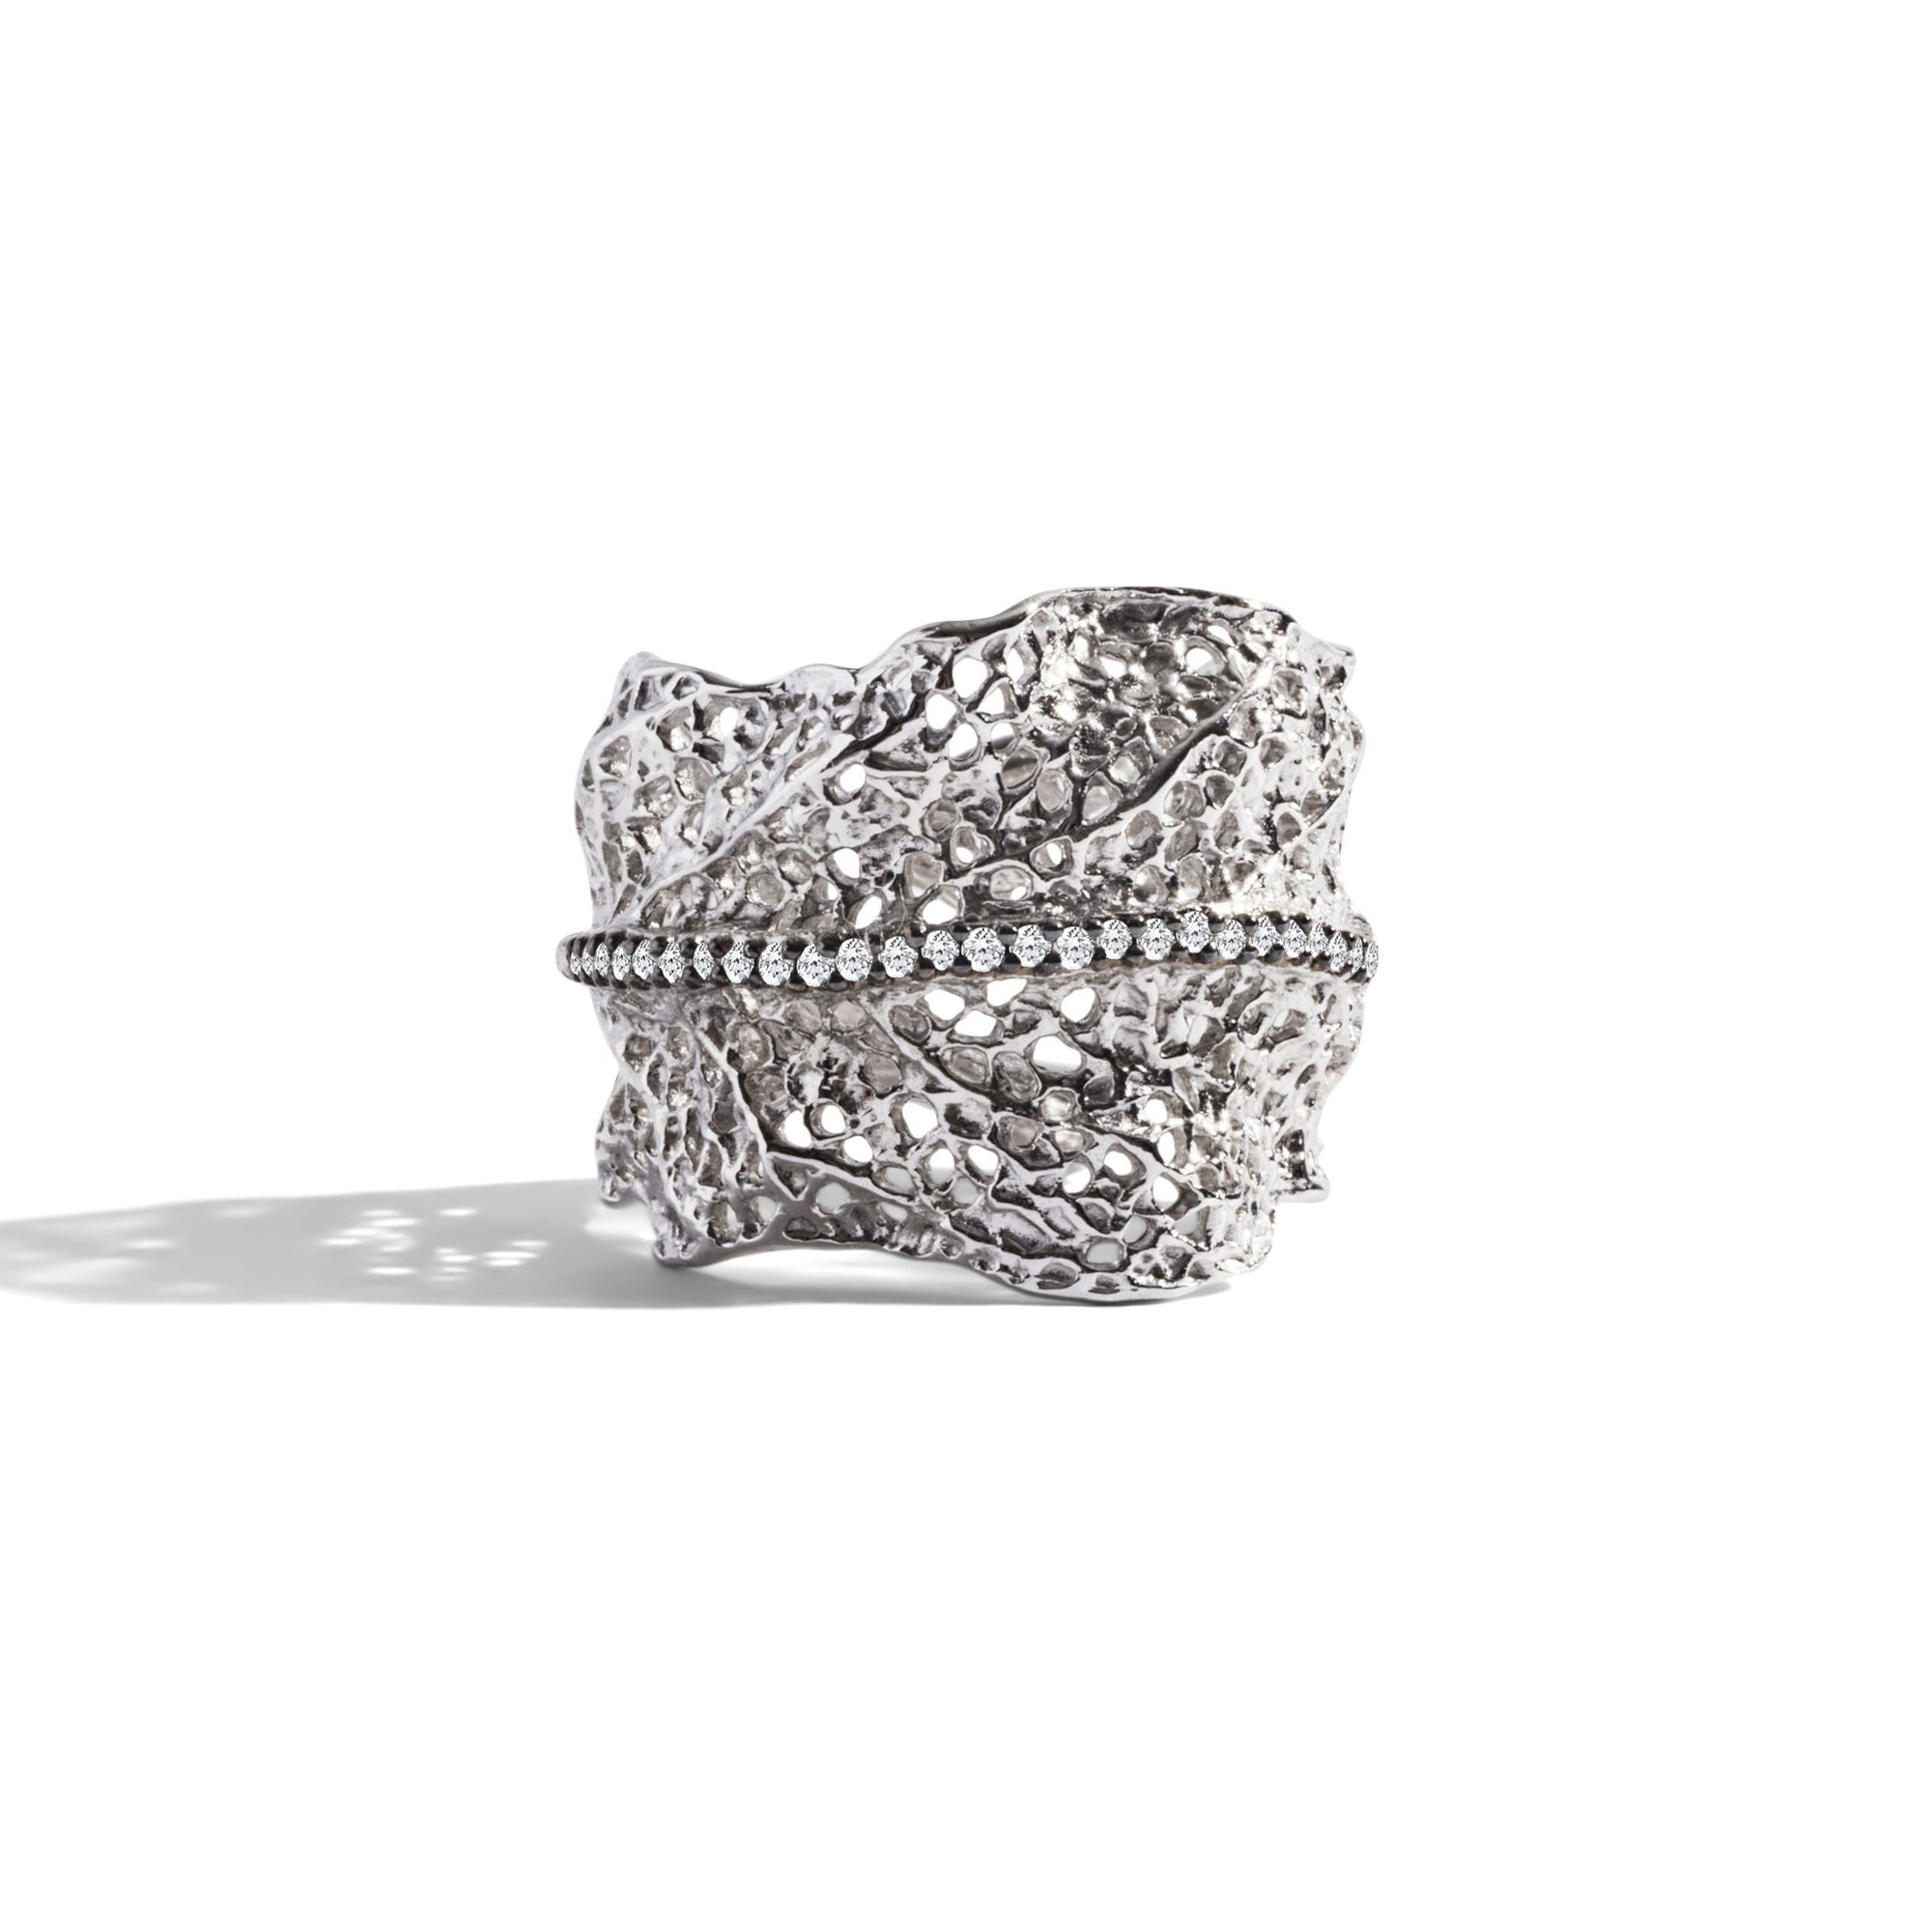 Michael Aram Gooseberry Ring with Diamonds